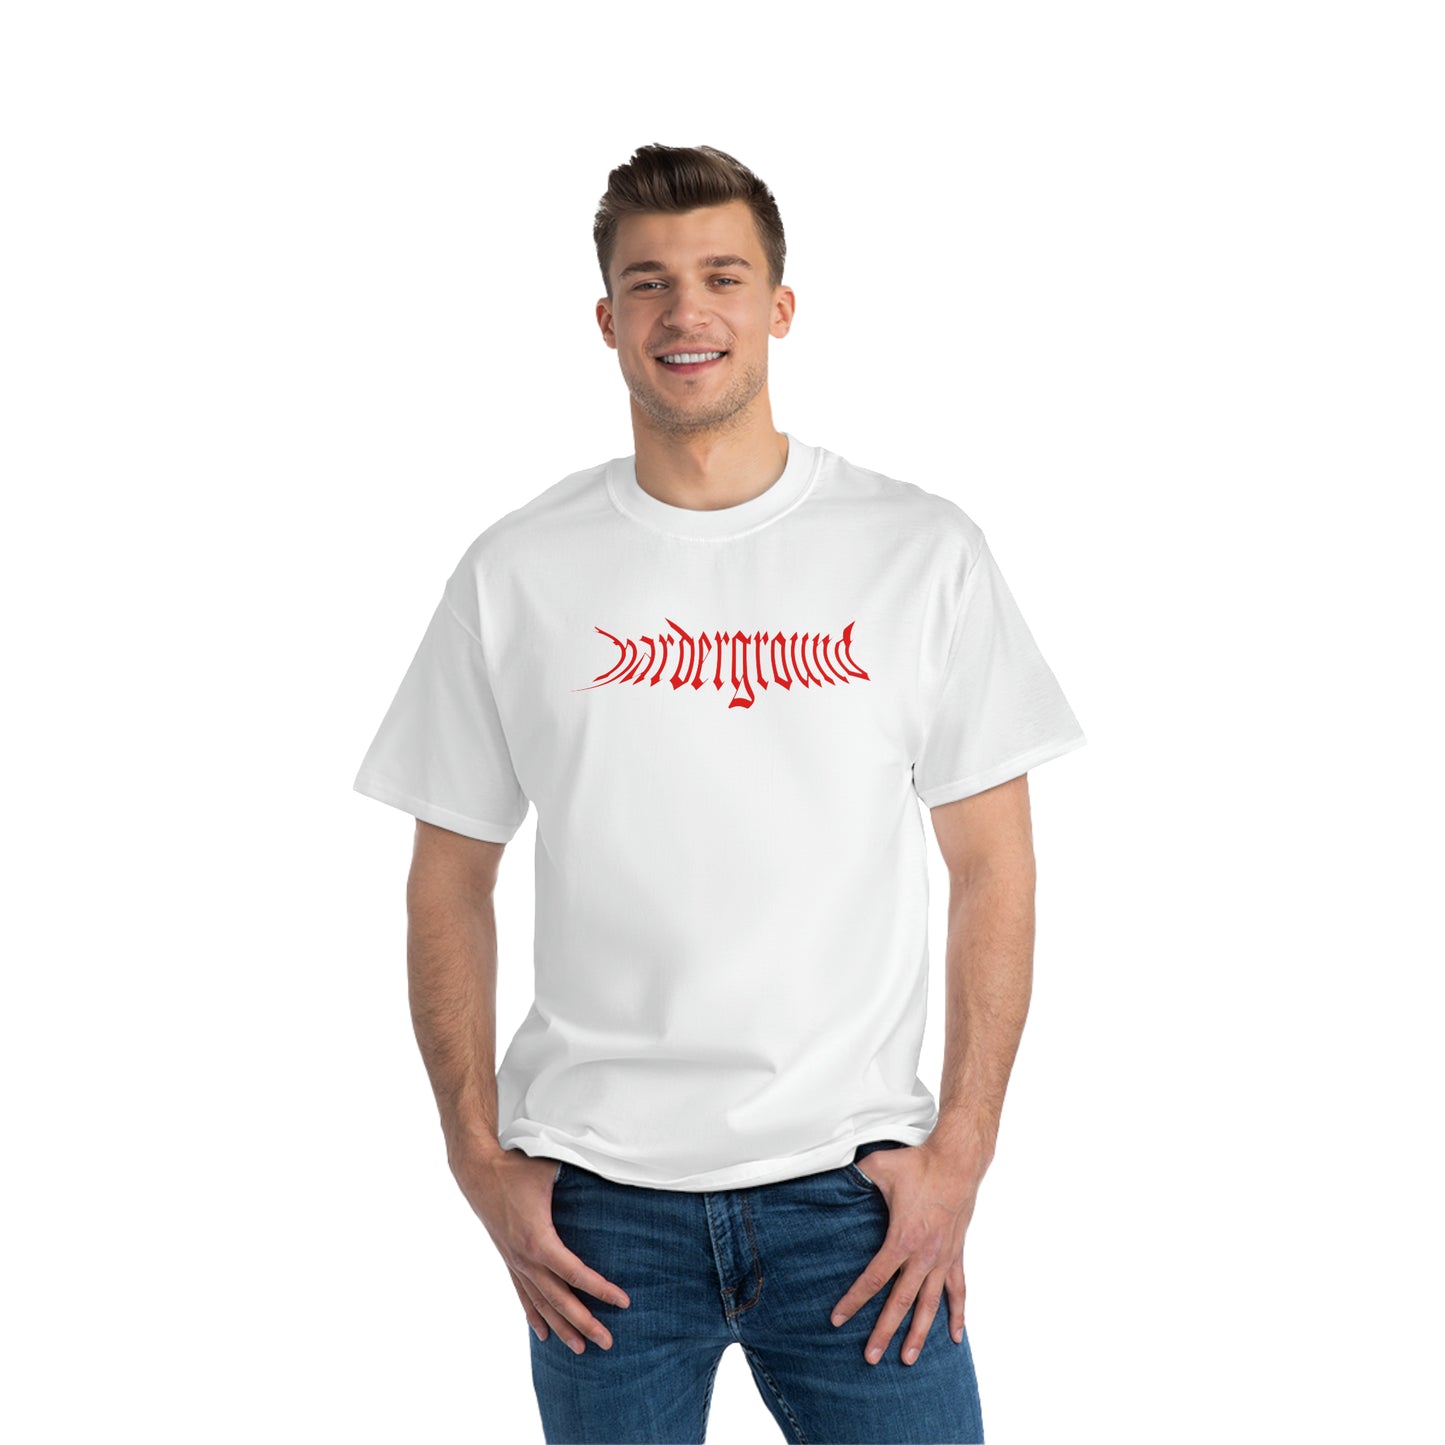 FLOWER Harderground - Front &amp; back logos - Beefy-T® Short-Sleeve T-Shirt